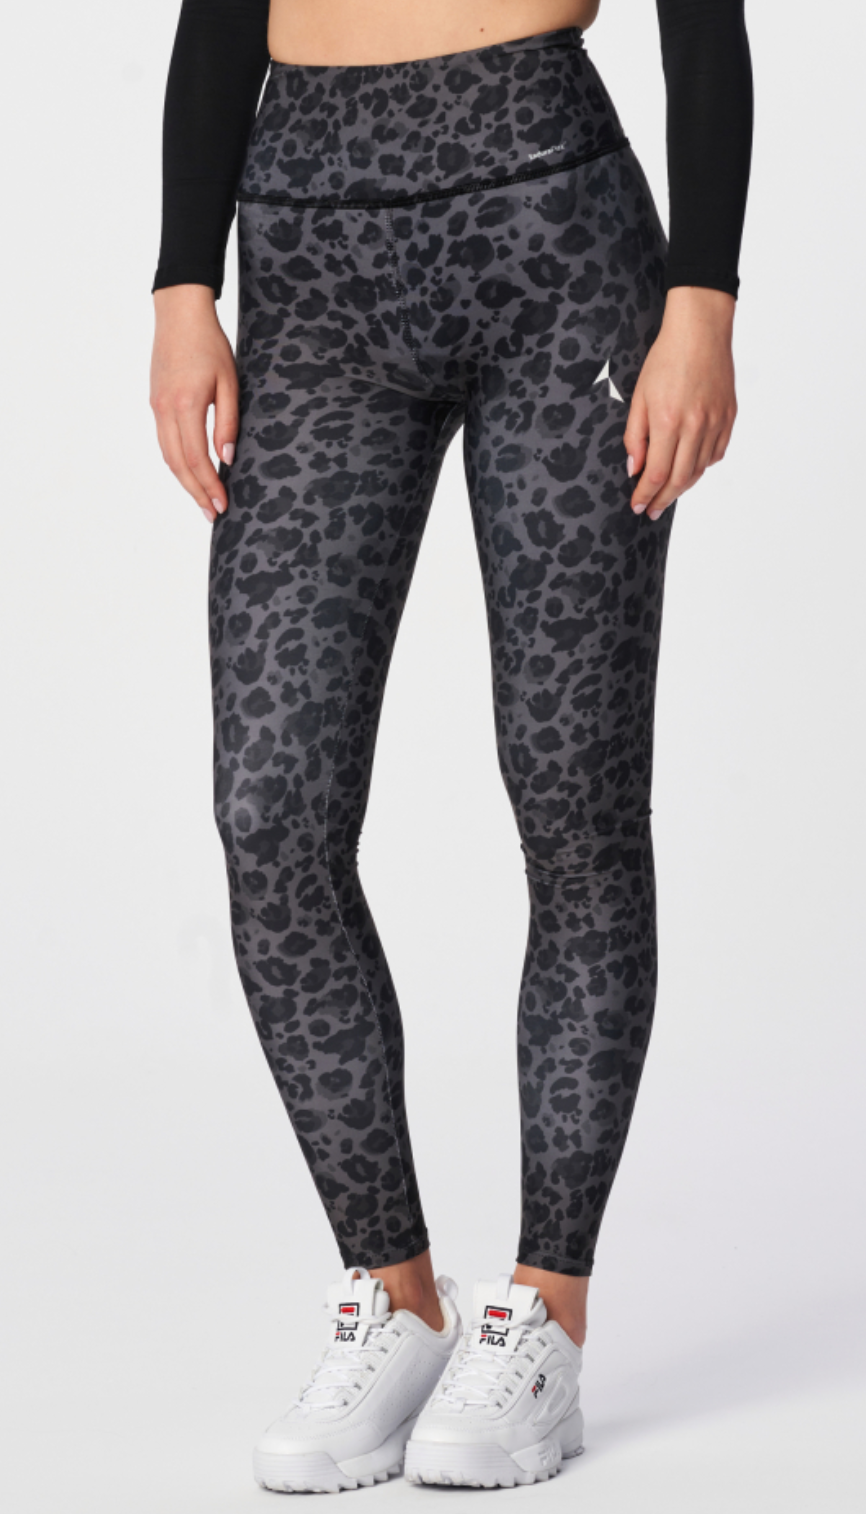 Carpatree - Leopard Print Leggings – tights dept.